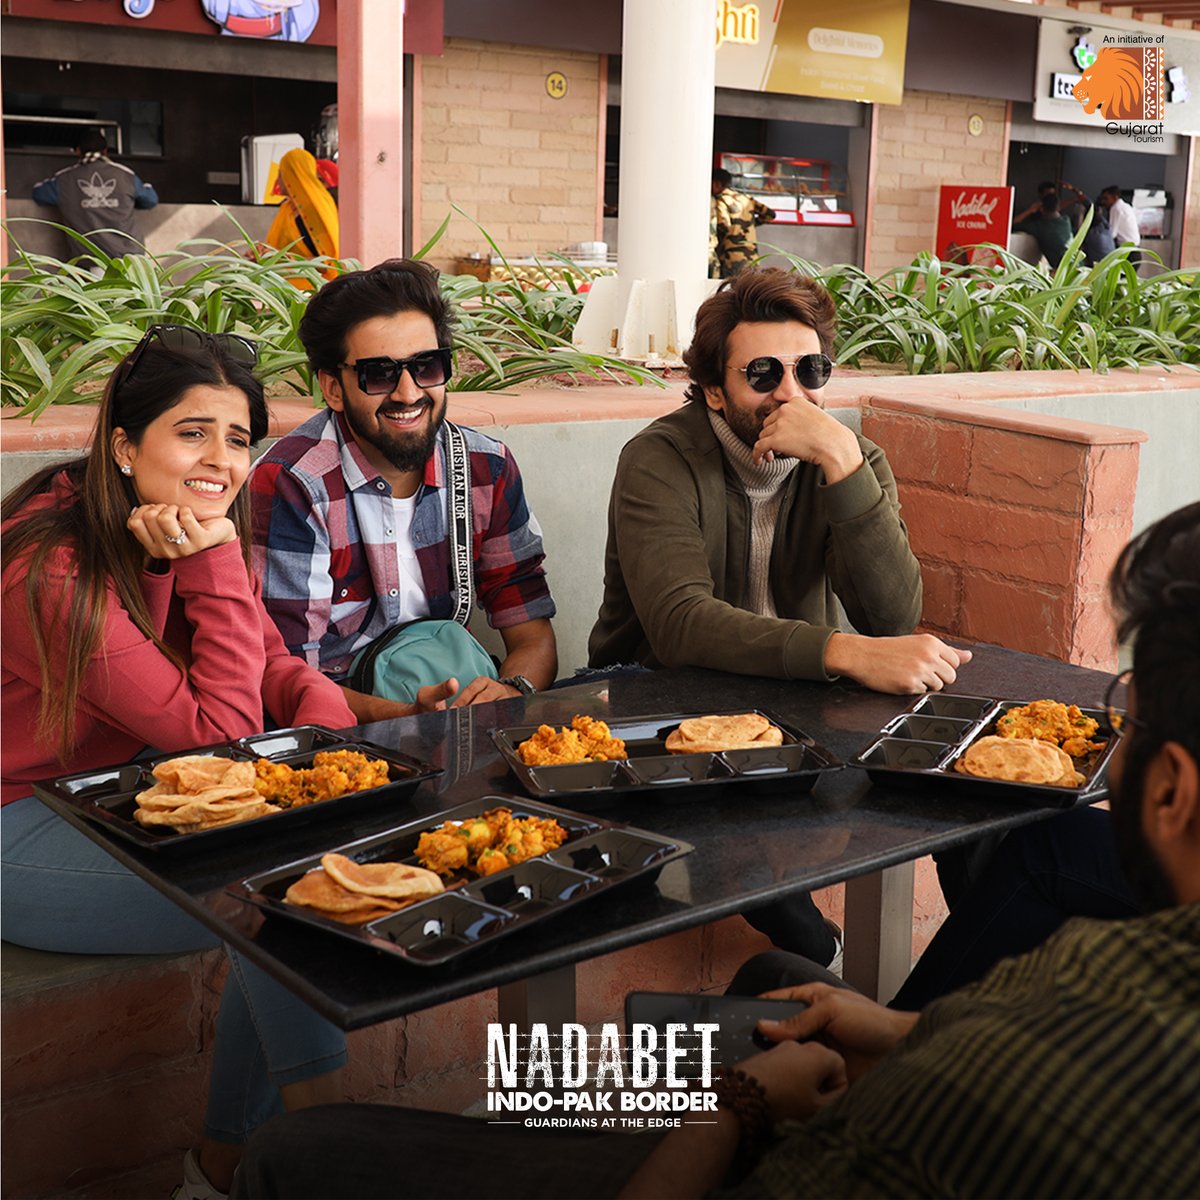 Take a break from exploring patriotism and treat yourself to some delicious bites at the Nadabet Indo-Pak Border’s food court.

#food #foodcourt #visitnadabet #IndoPakBorder #NadabetBorder #SeemaDarshan #Gujarat #gujarattourism #exploregujarat #incredibleindia